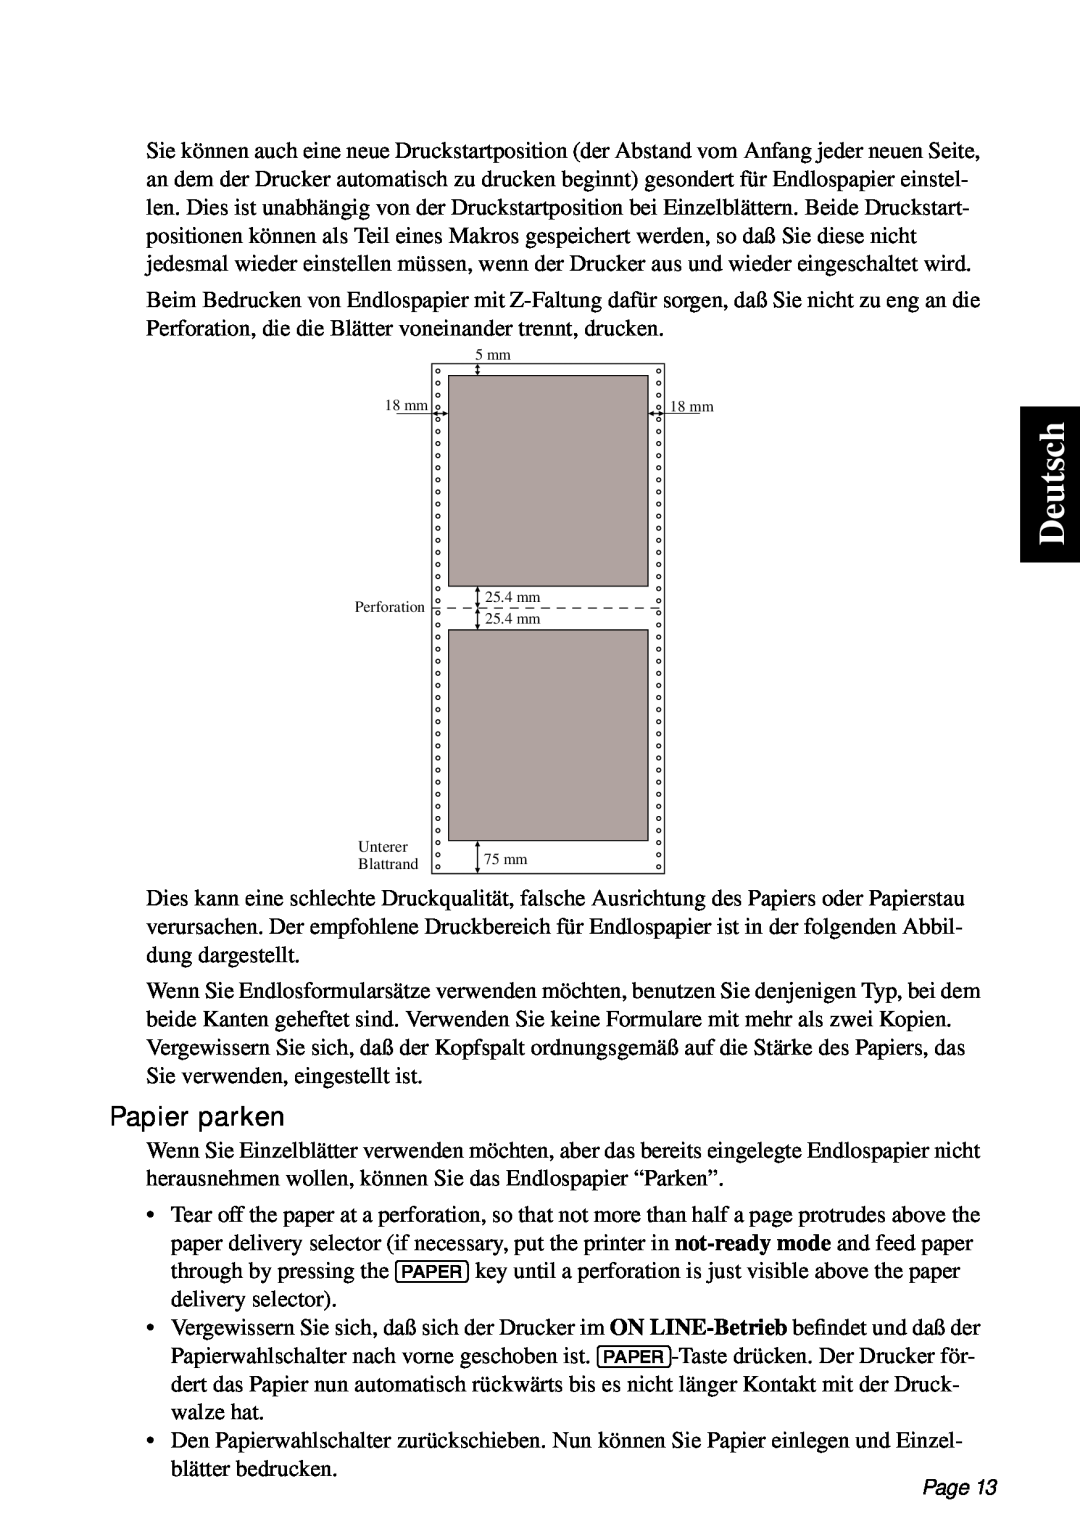 Star Micronics PT-10Q user manual Deutsch, Papier parken, Page 